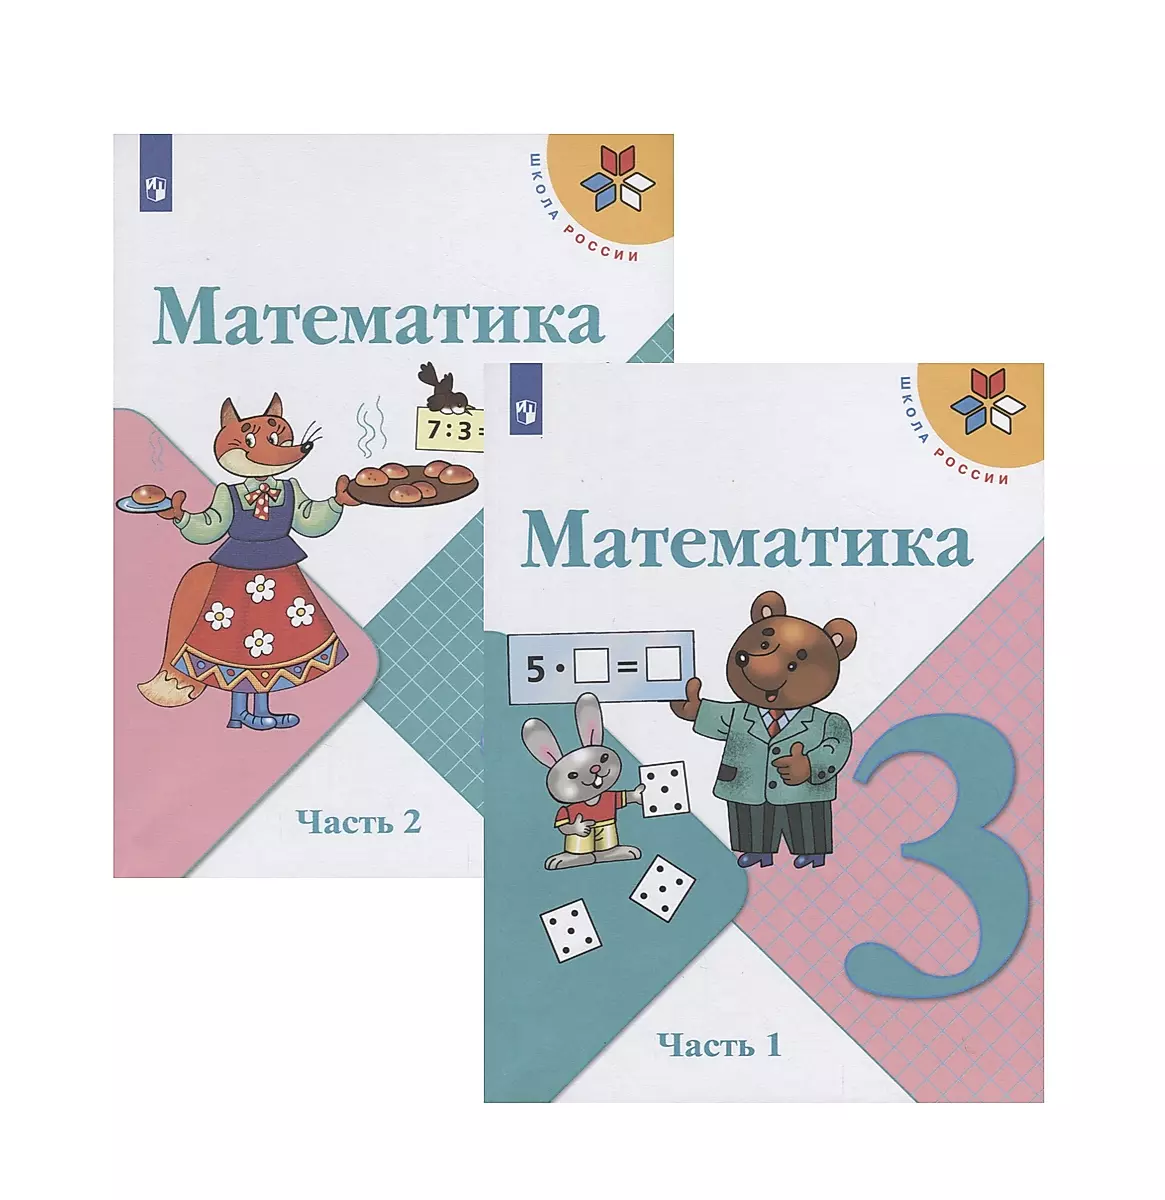 Решебник по Математике 3 класс — Муравьёва | Супер Решеба